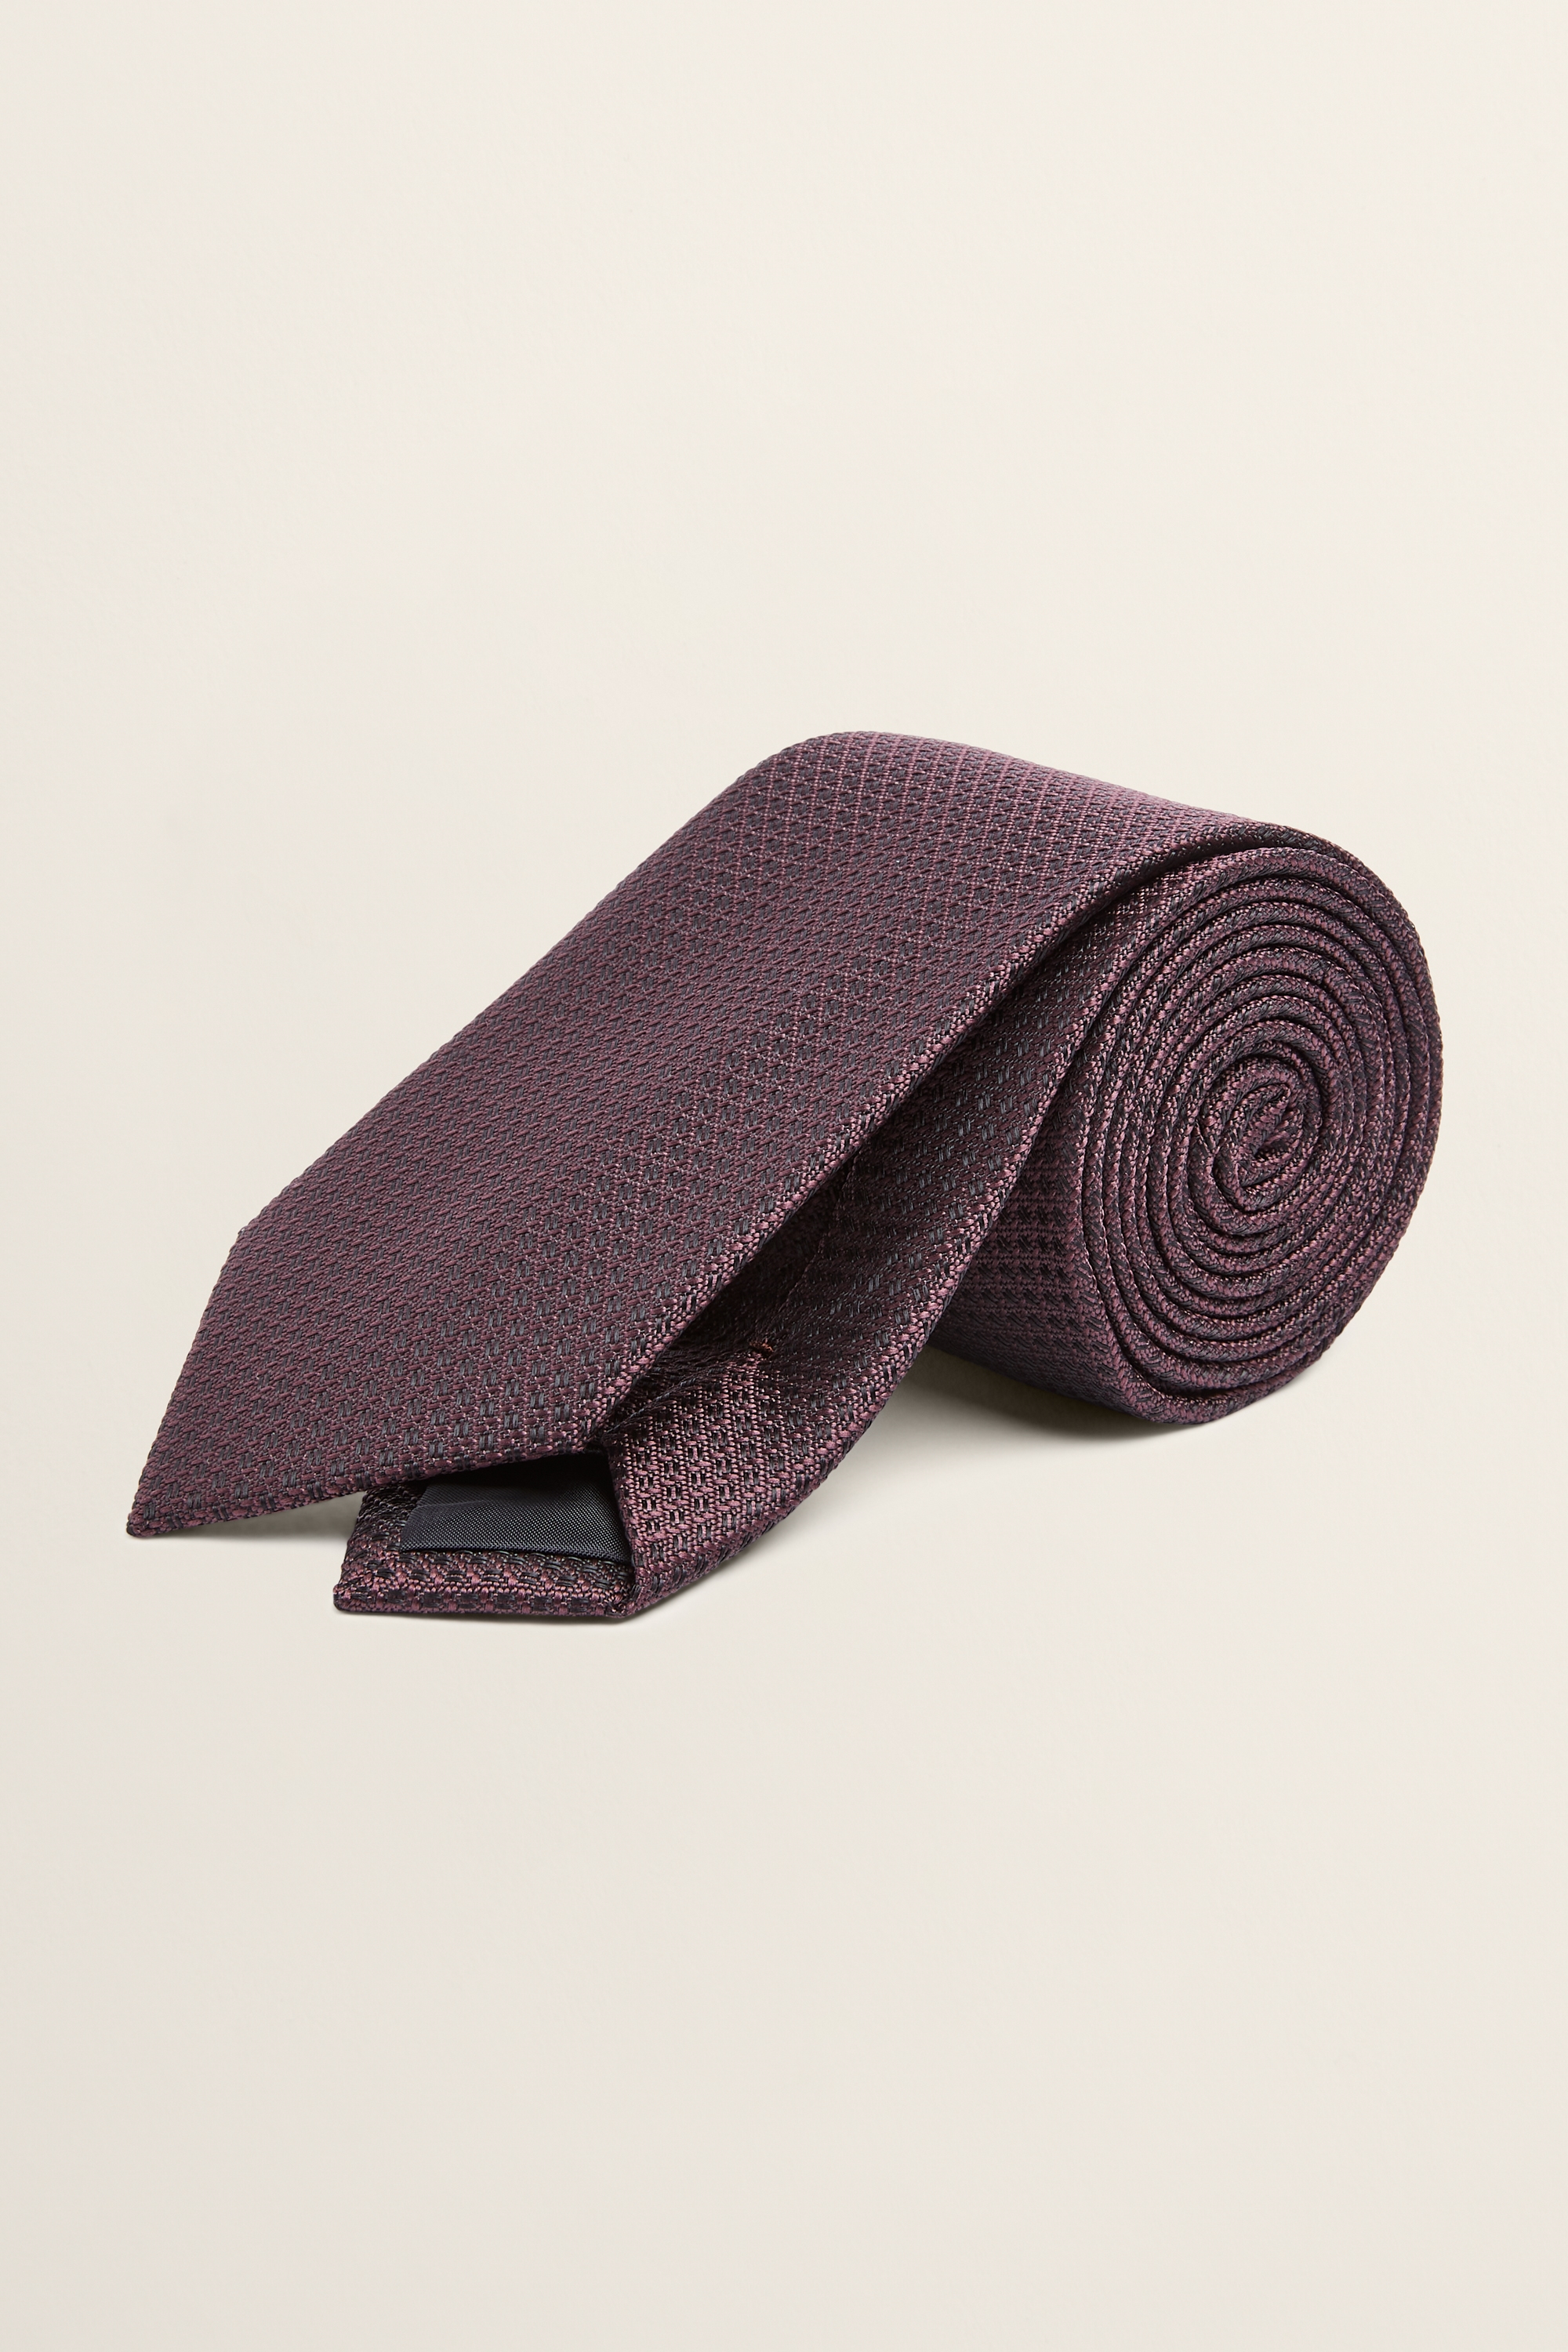 Burgundy Textured Tie | Buy Online at Moss